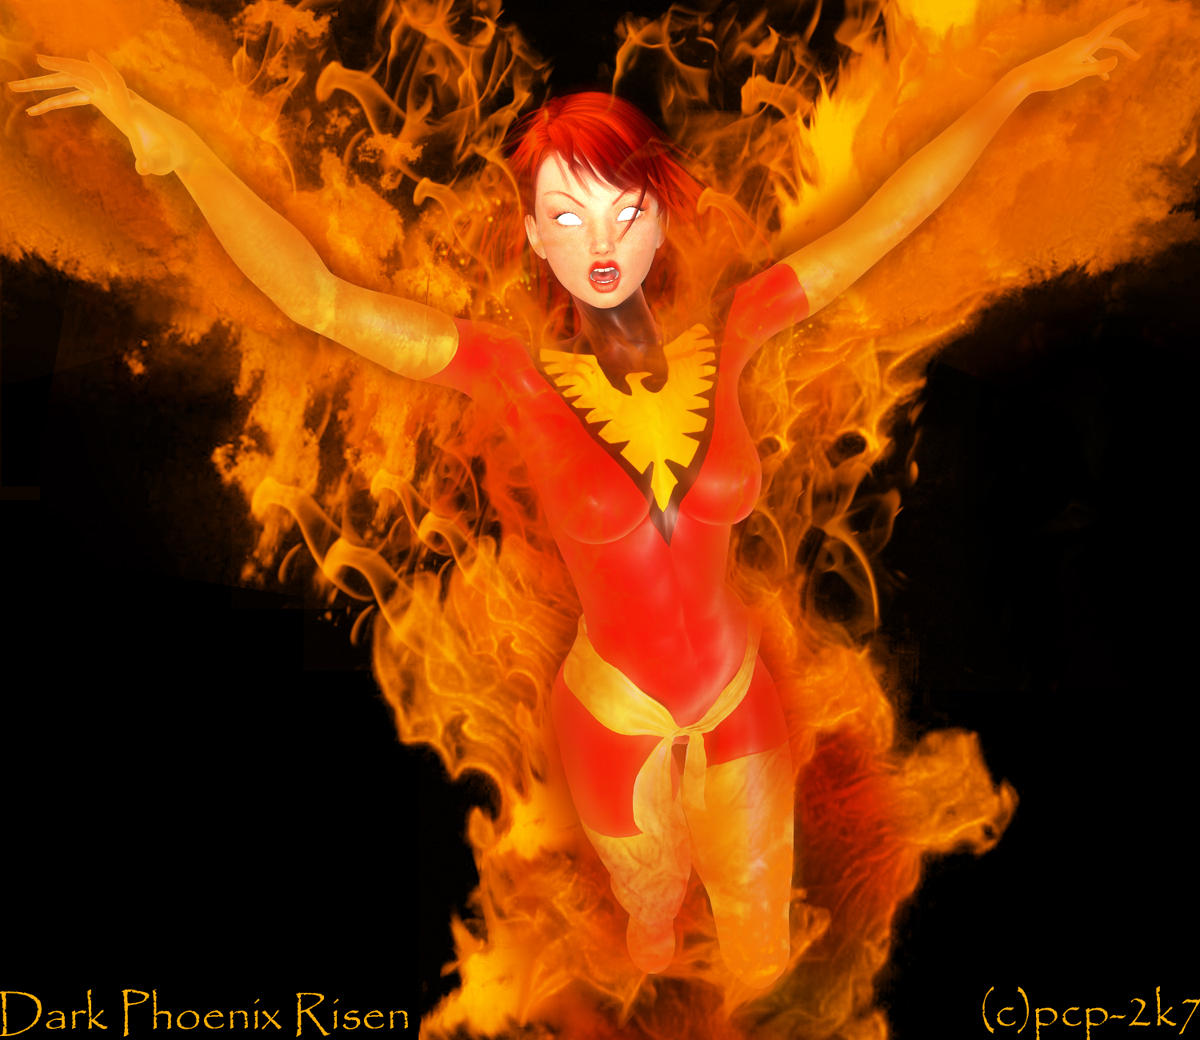 Dark Phoenix Risen